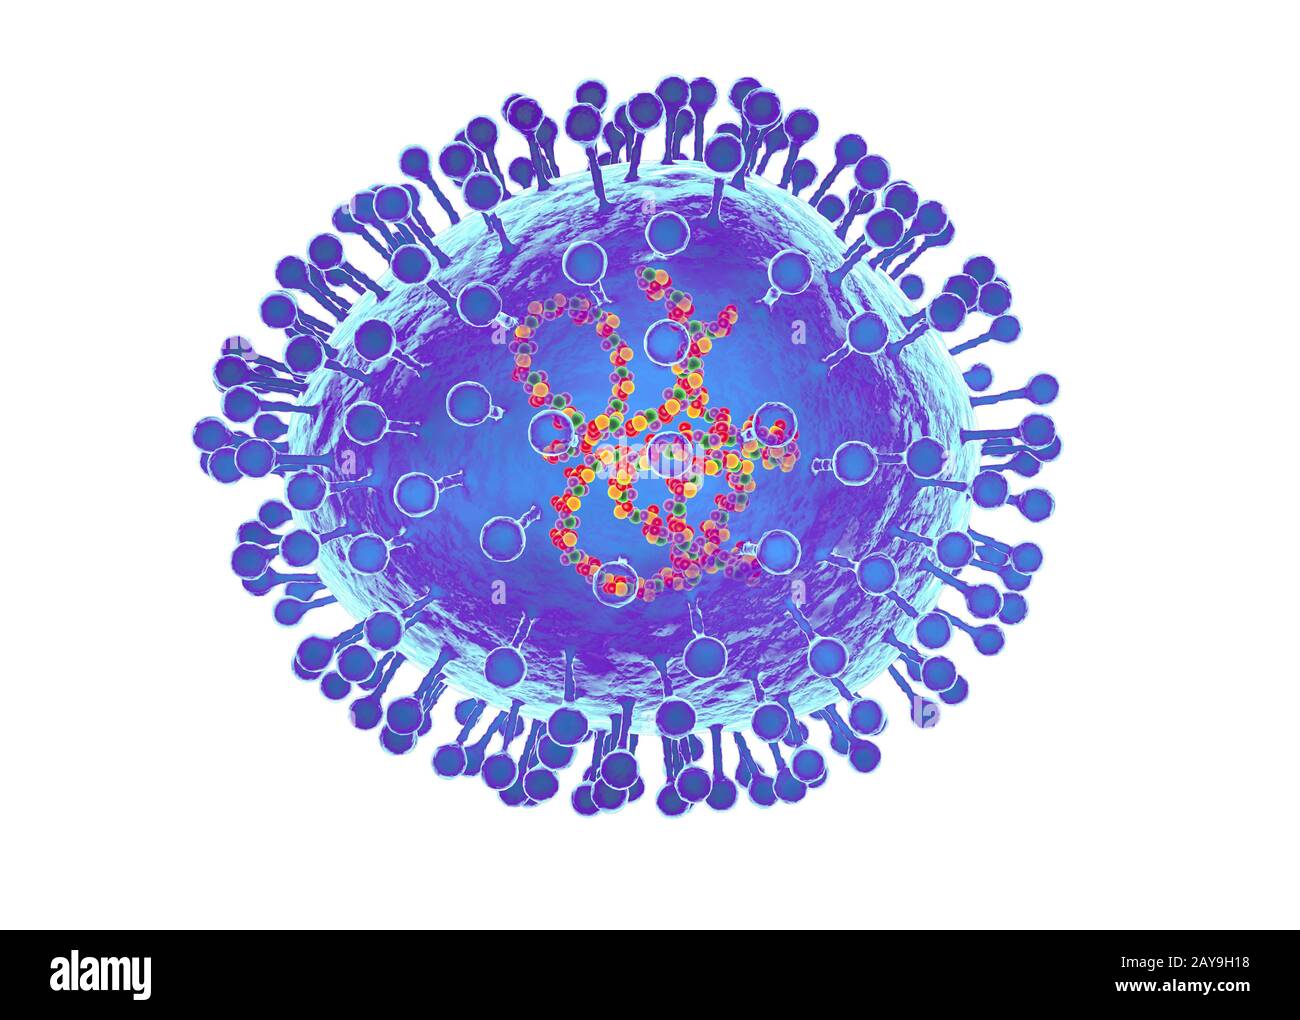 Métapneumovirus humain, illustration Banque D'Images